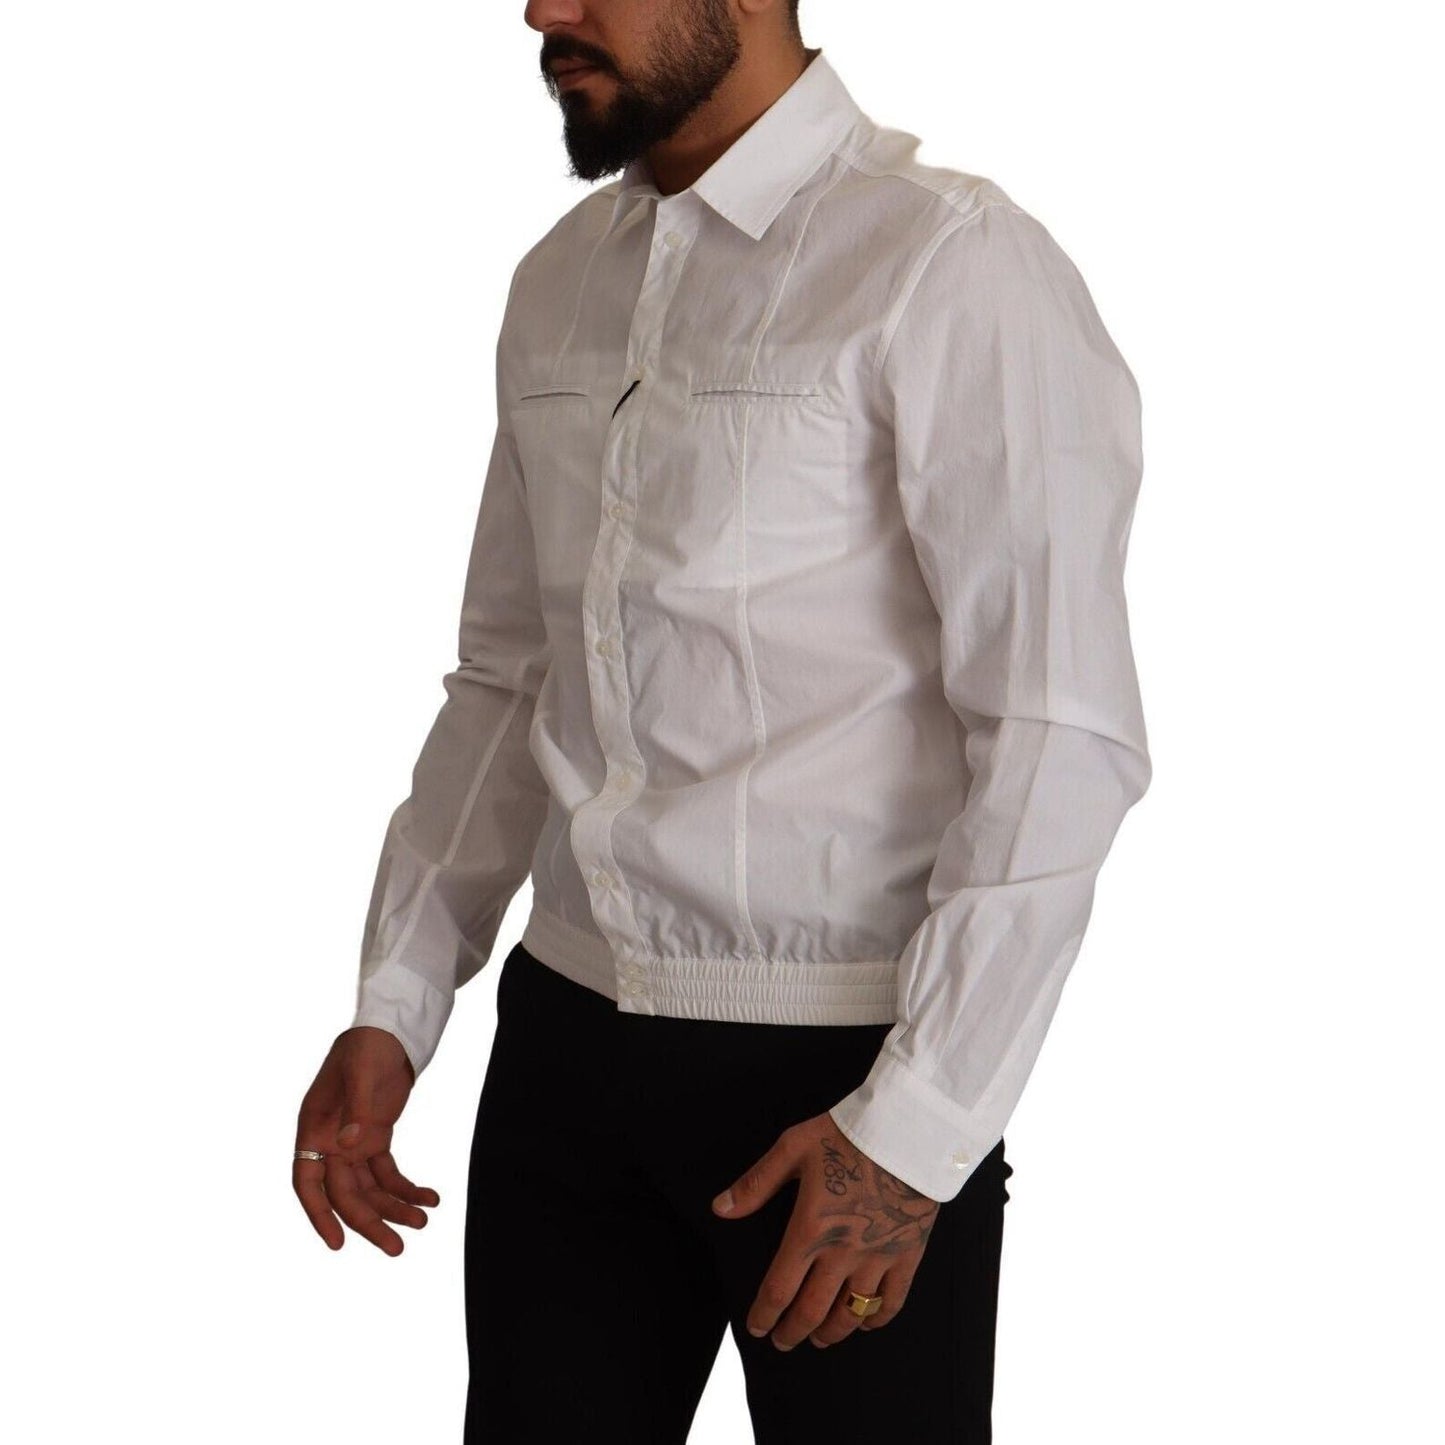 Dolce & Gabbana Elegant Italian White Cotton Shirt white-cotton-button-down-men-collared-shirt